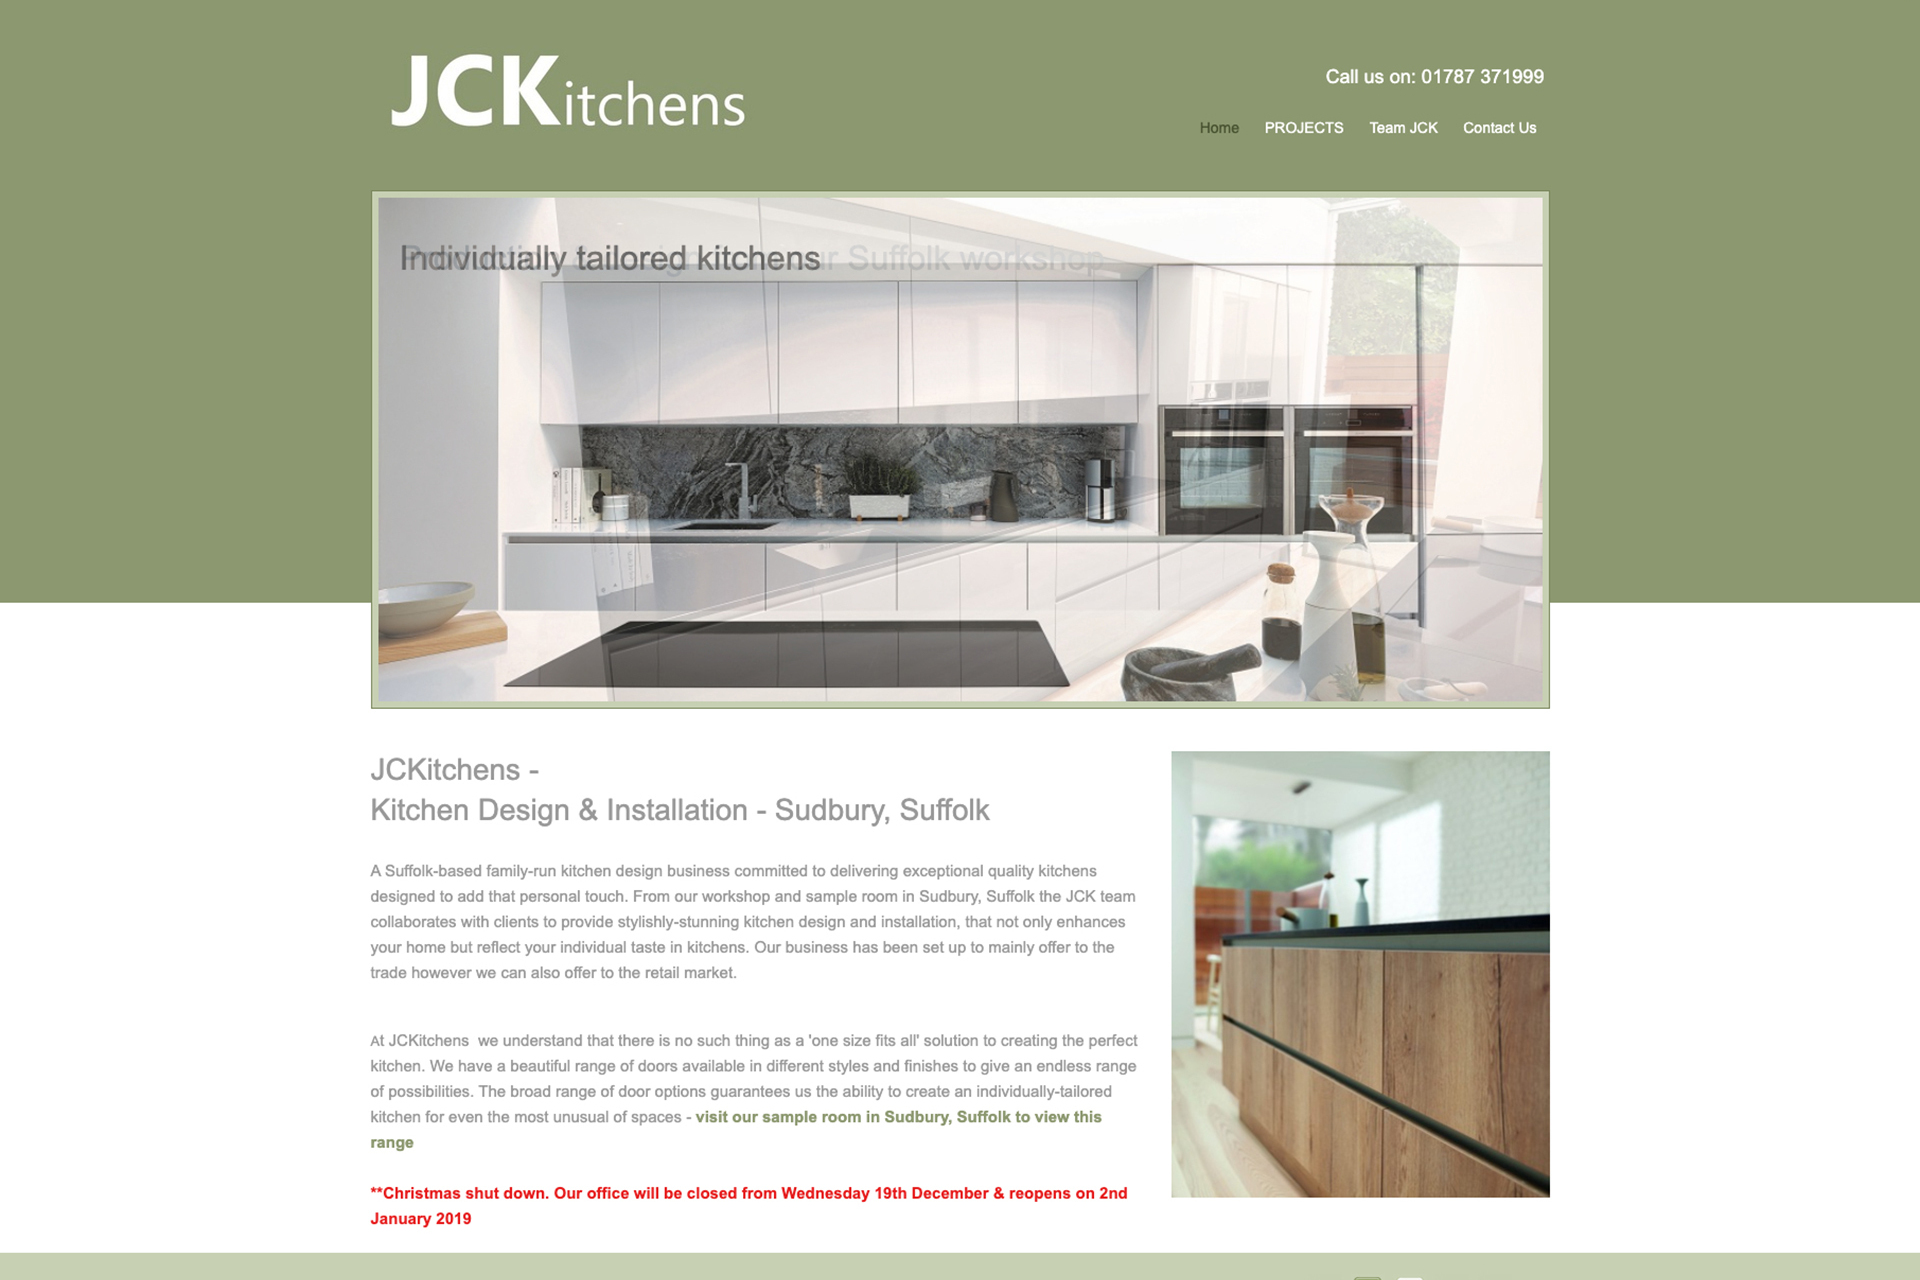 JCKitchens website - Before redesign